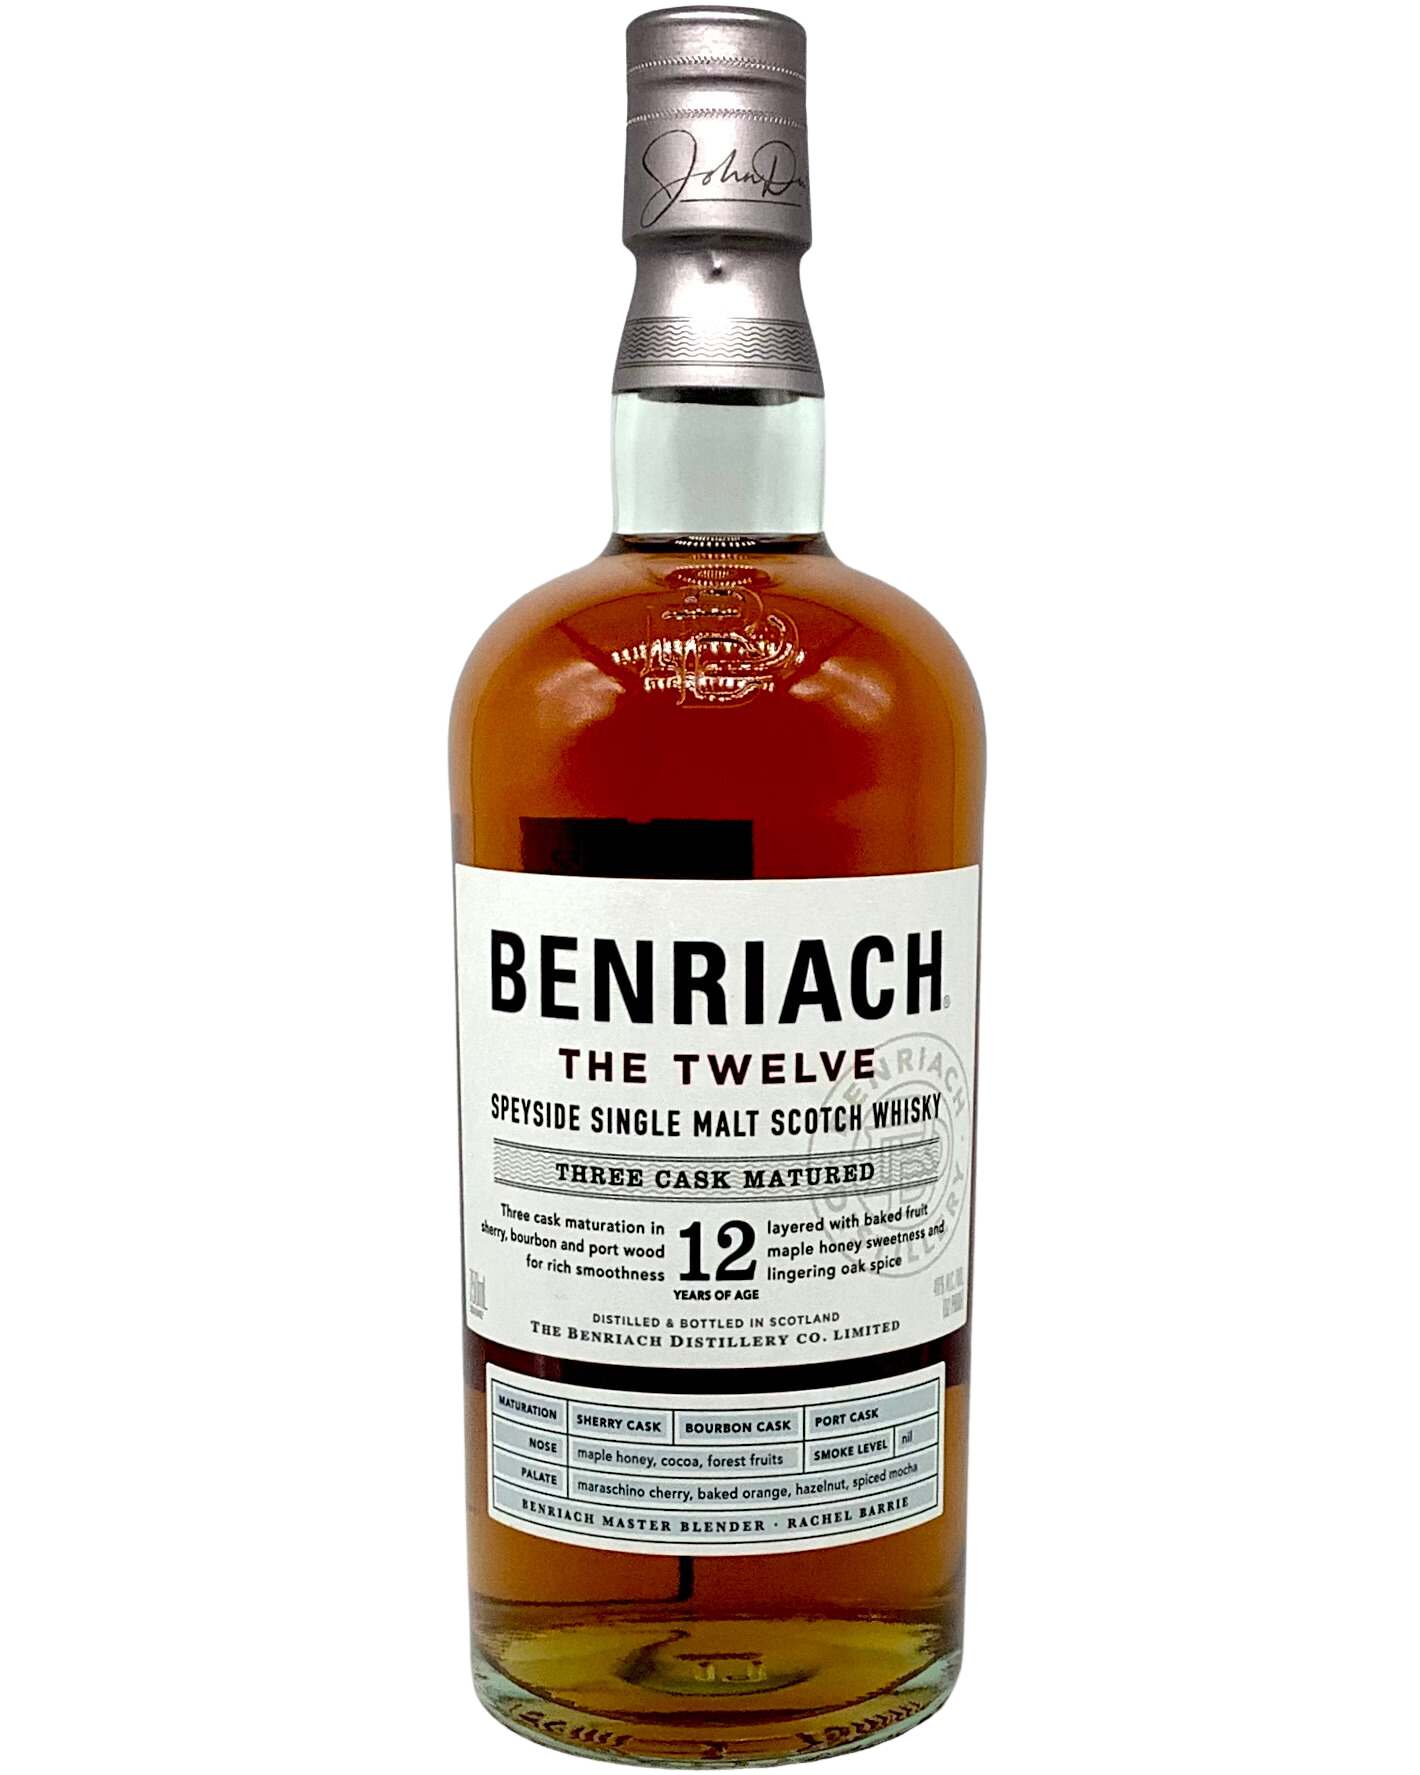 Benriach, Speyside Single Malt Scotch Wiskey "The Twelve" Three Cask Matured 12yo. Scotland 750ml newarrival